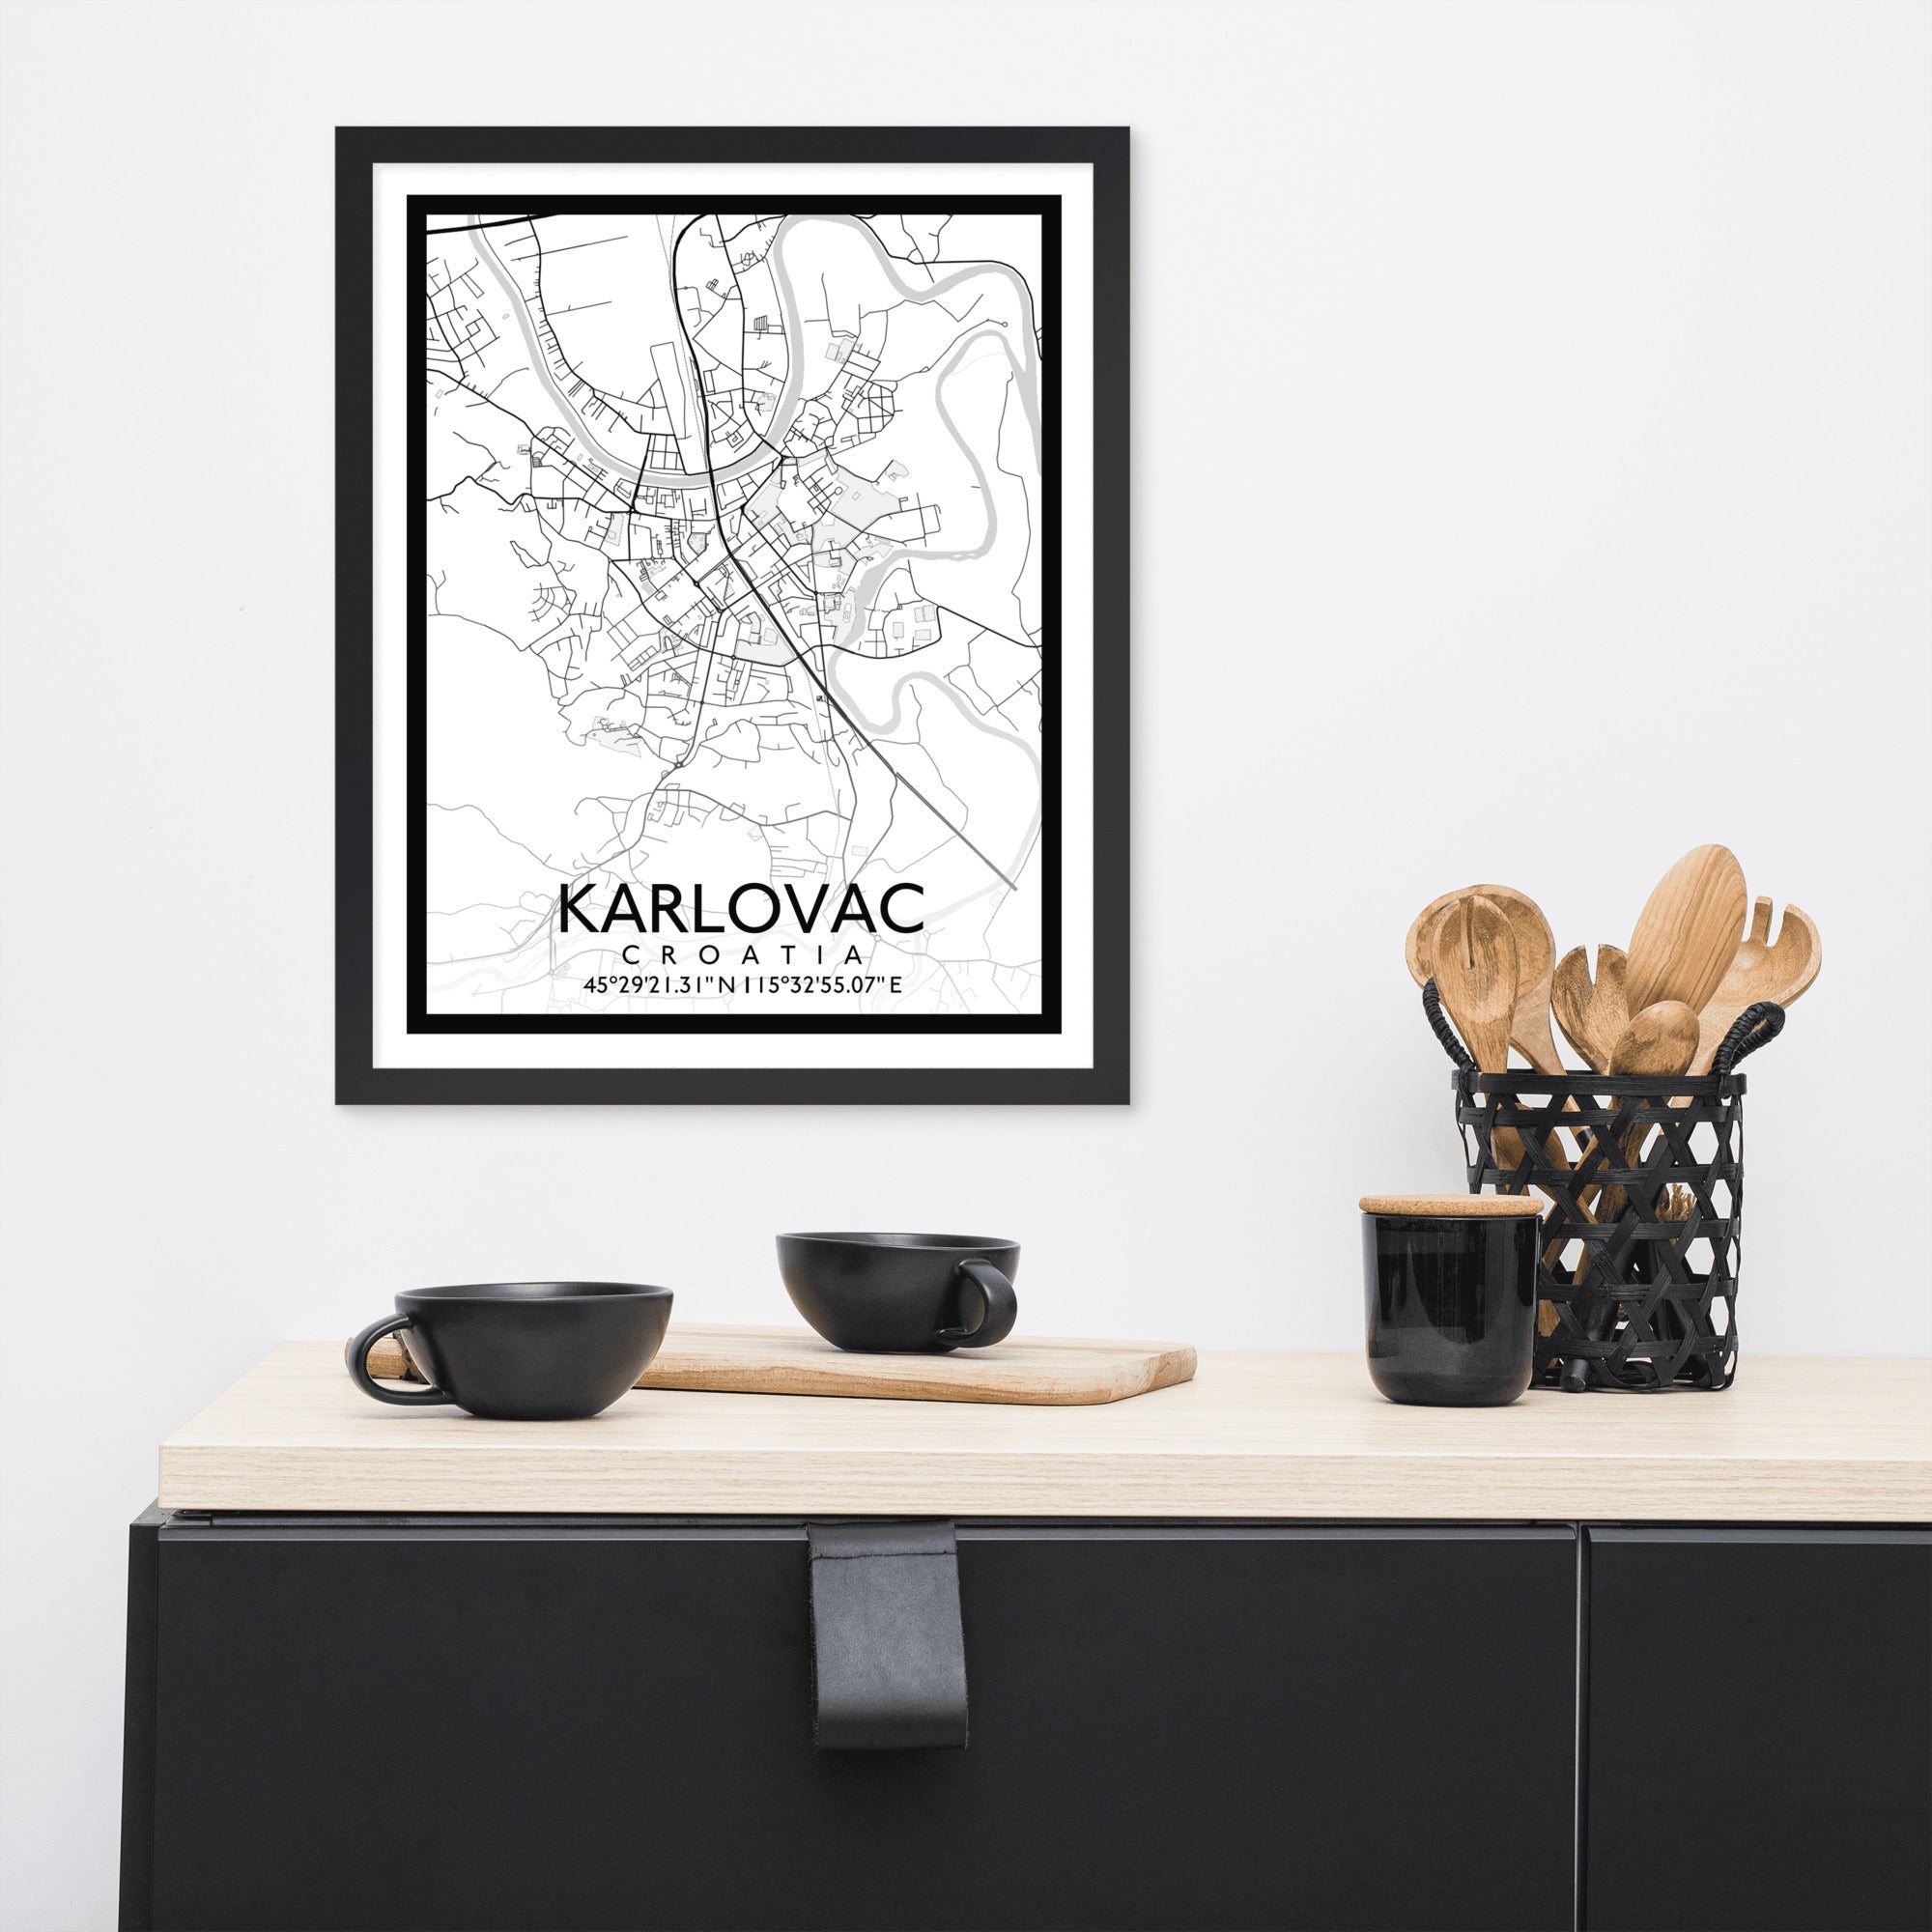 Karlovac - White City Map Framed Wall Art